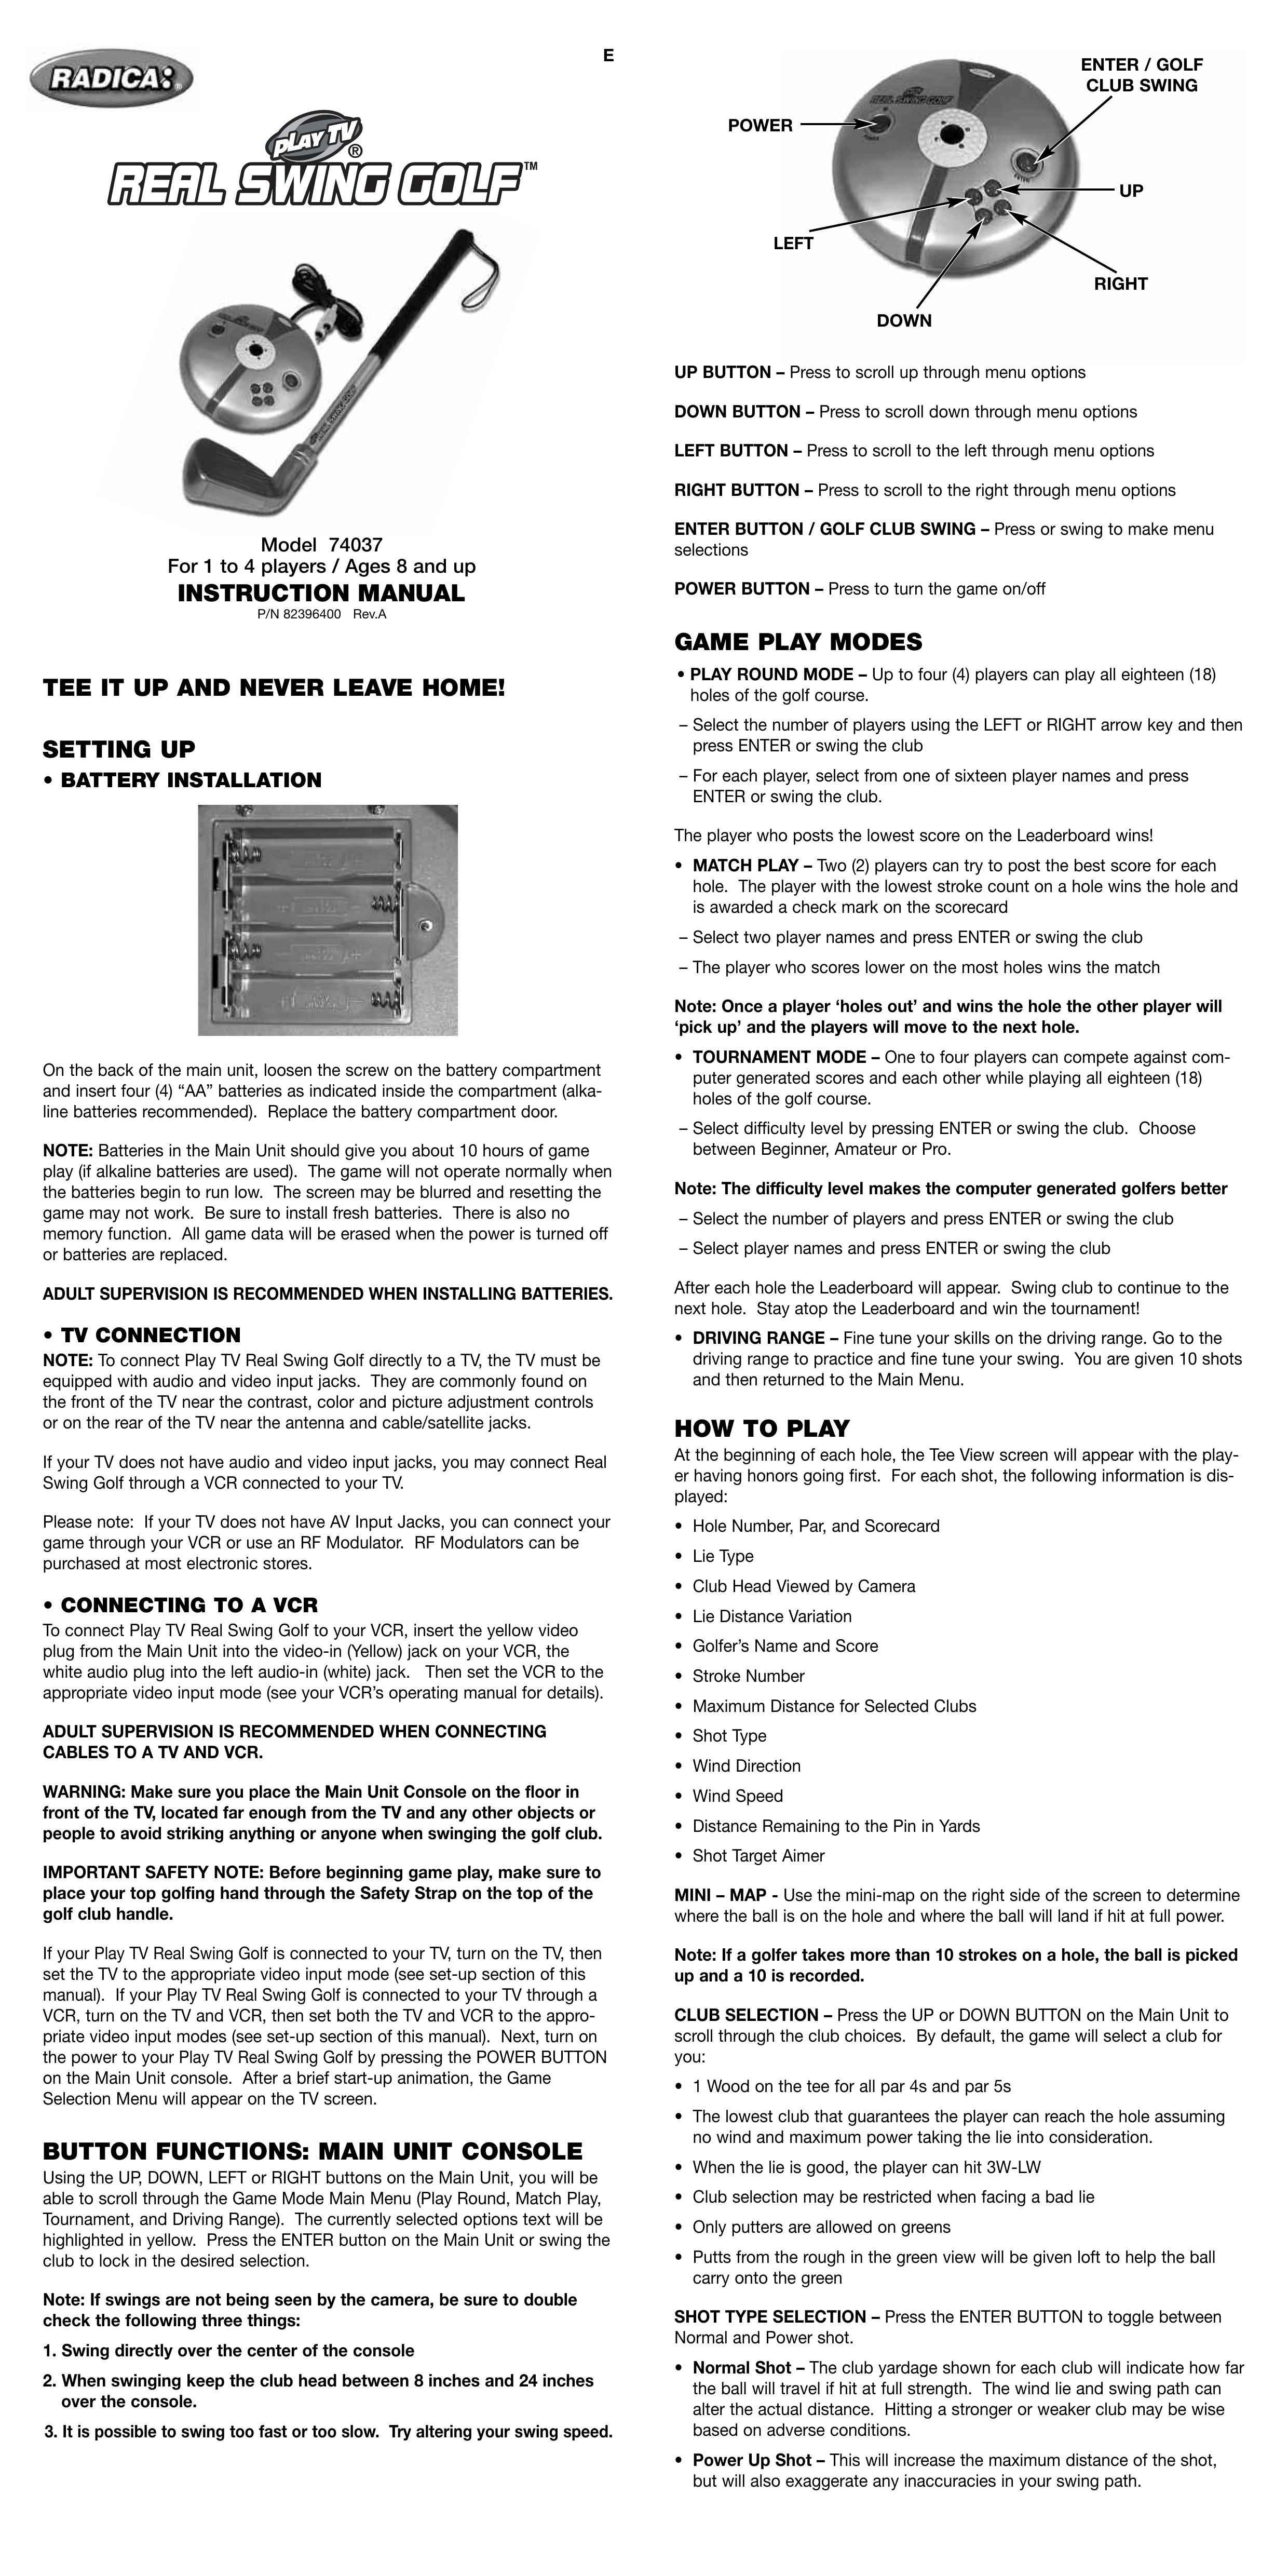 Radica Games 74037 Patio Furniture User Manual